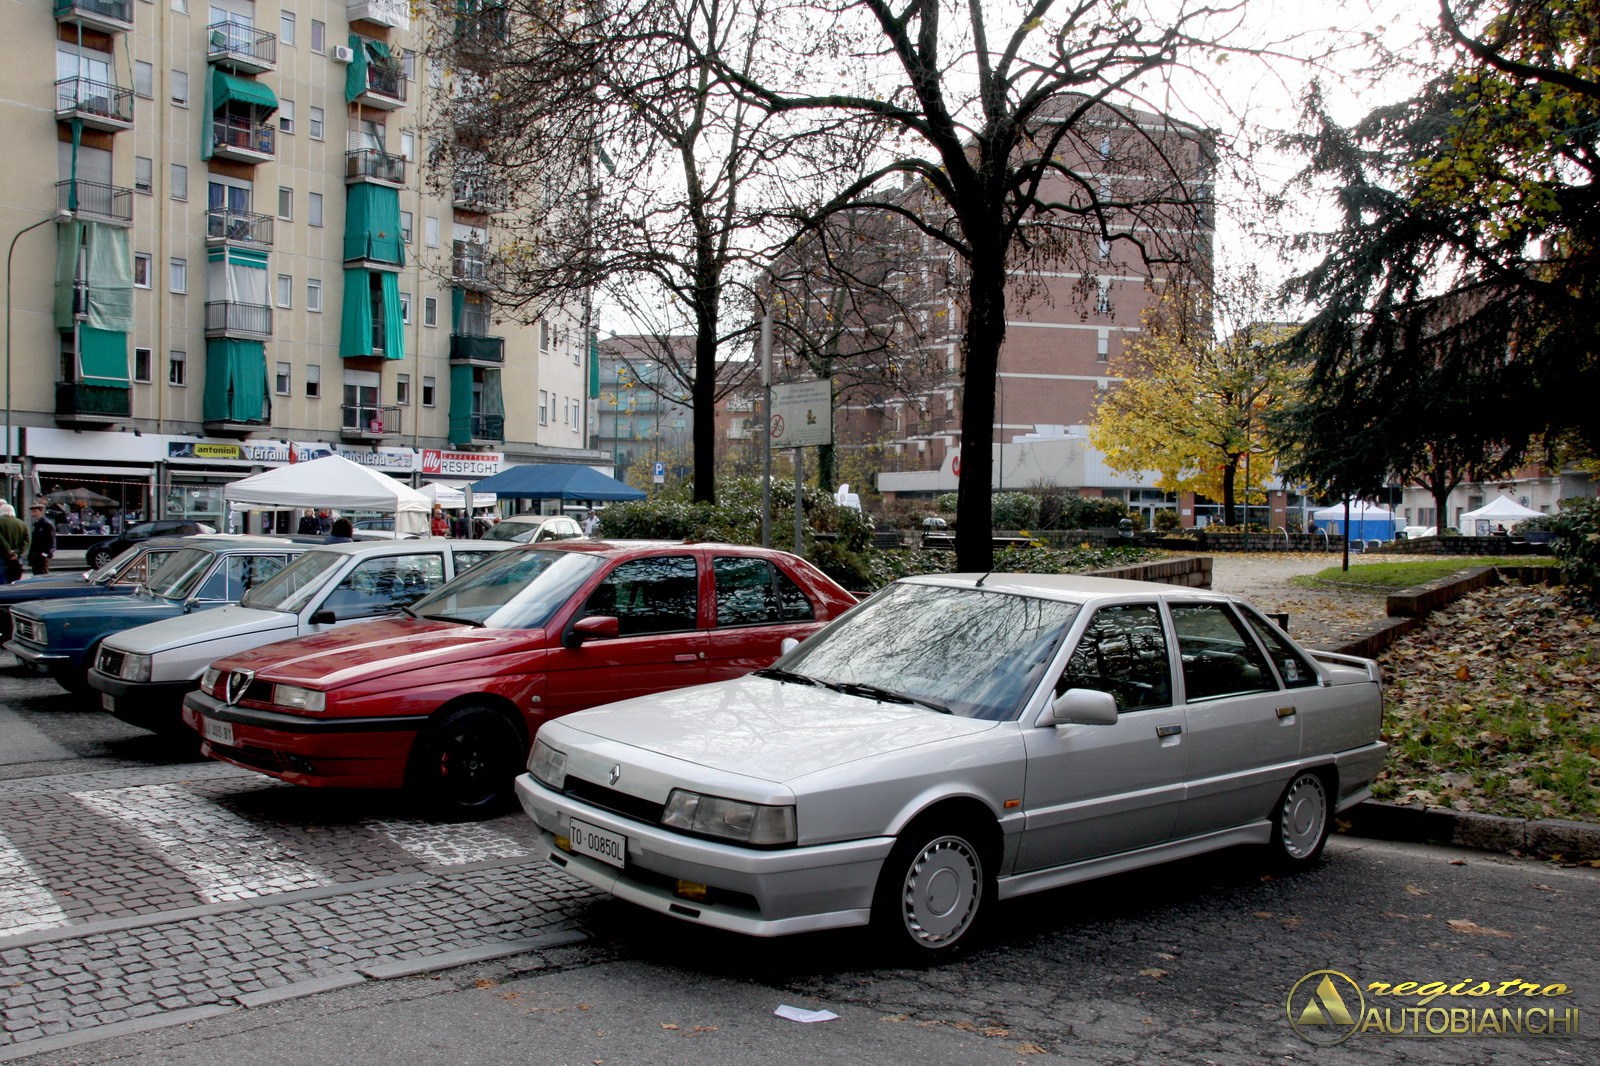 2014-11-16_Torino-piazza-Respighi_037